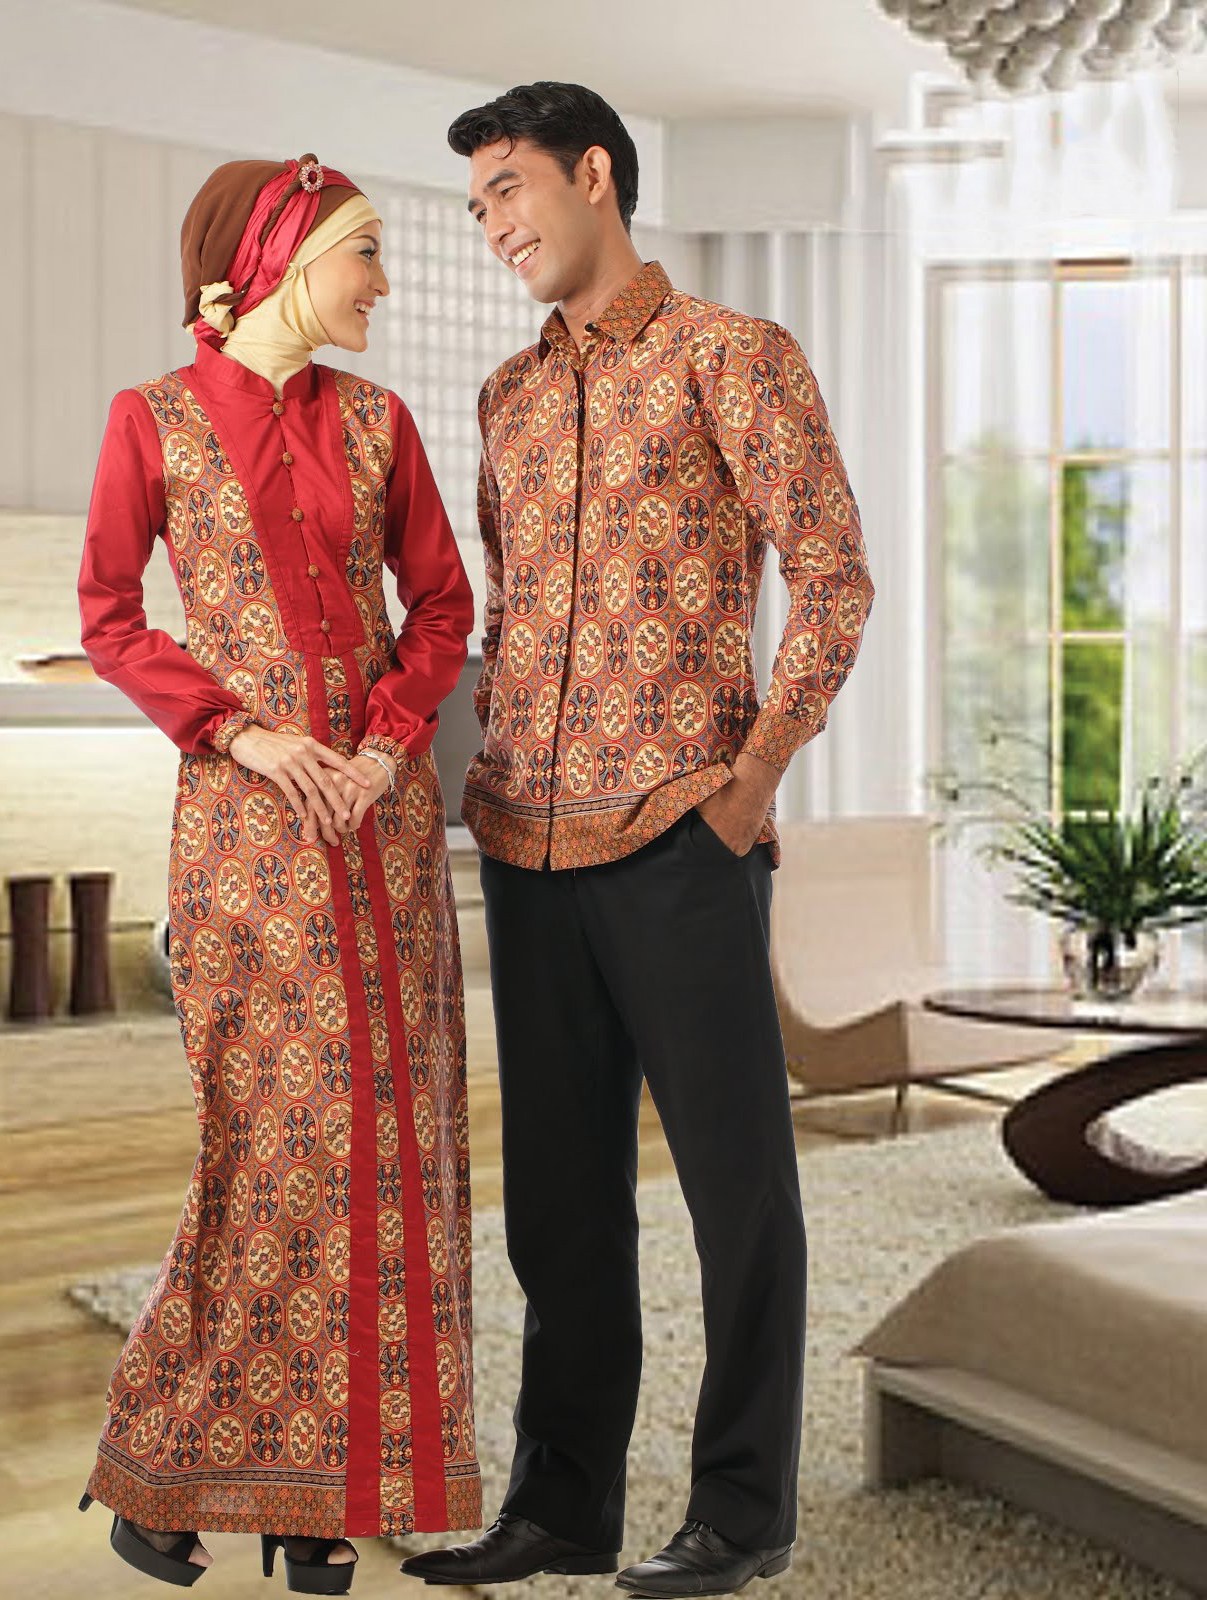 Ide Baju Lebaran Pria Terbaru Tqd3 Trend Model Baju Batik Lebaran Terbaru 2013